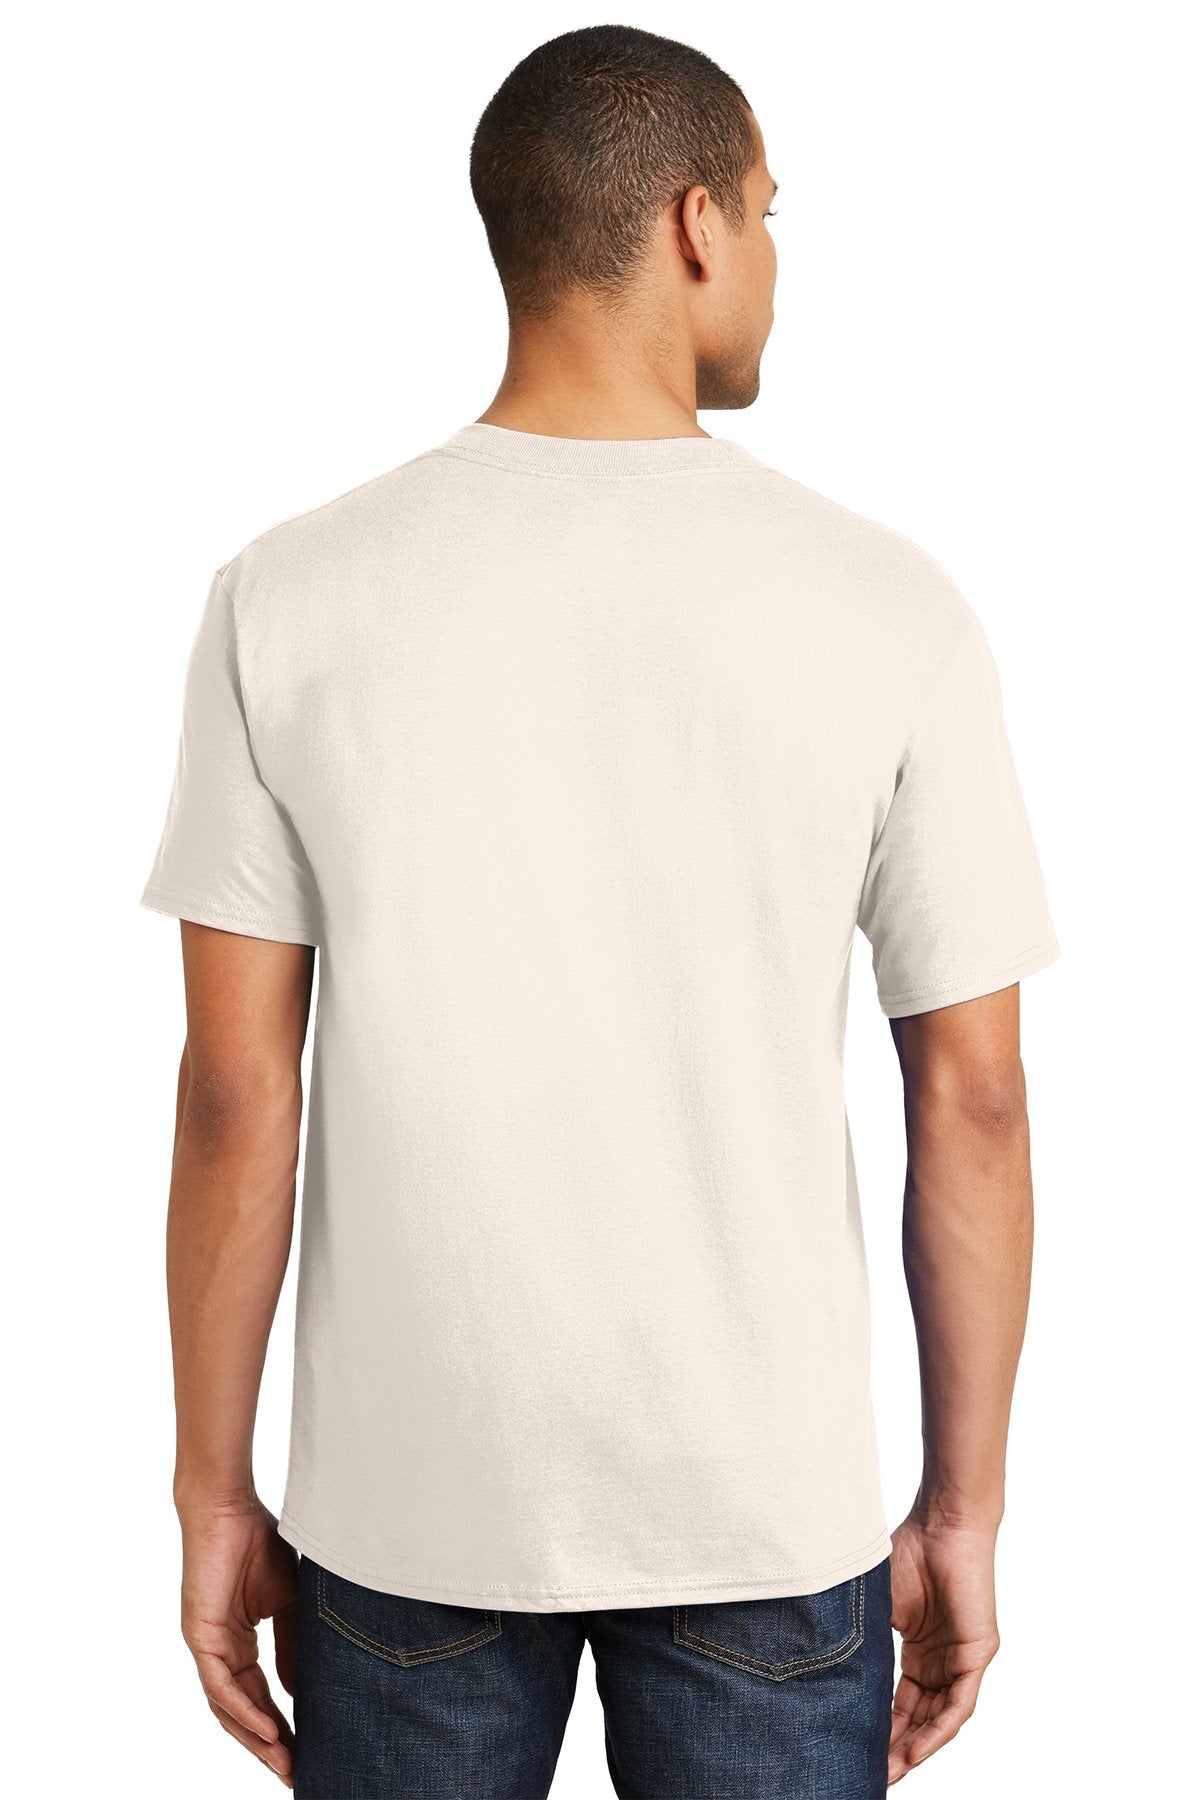 hanes beefy cotton t shirt 5180 natural